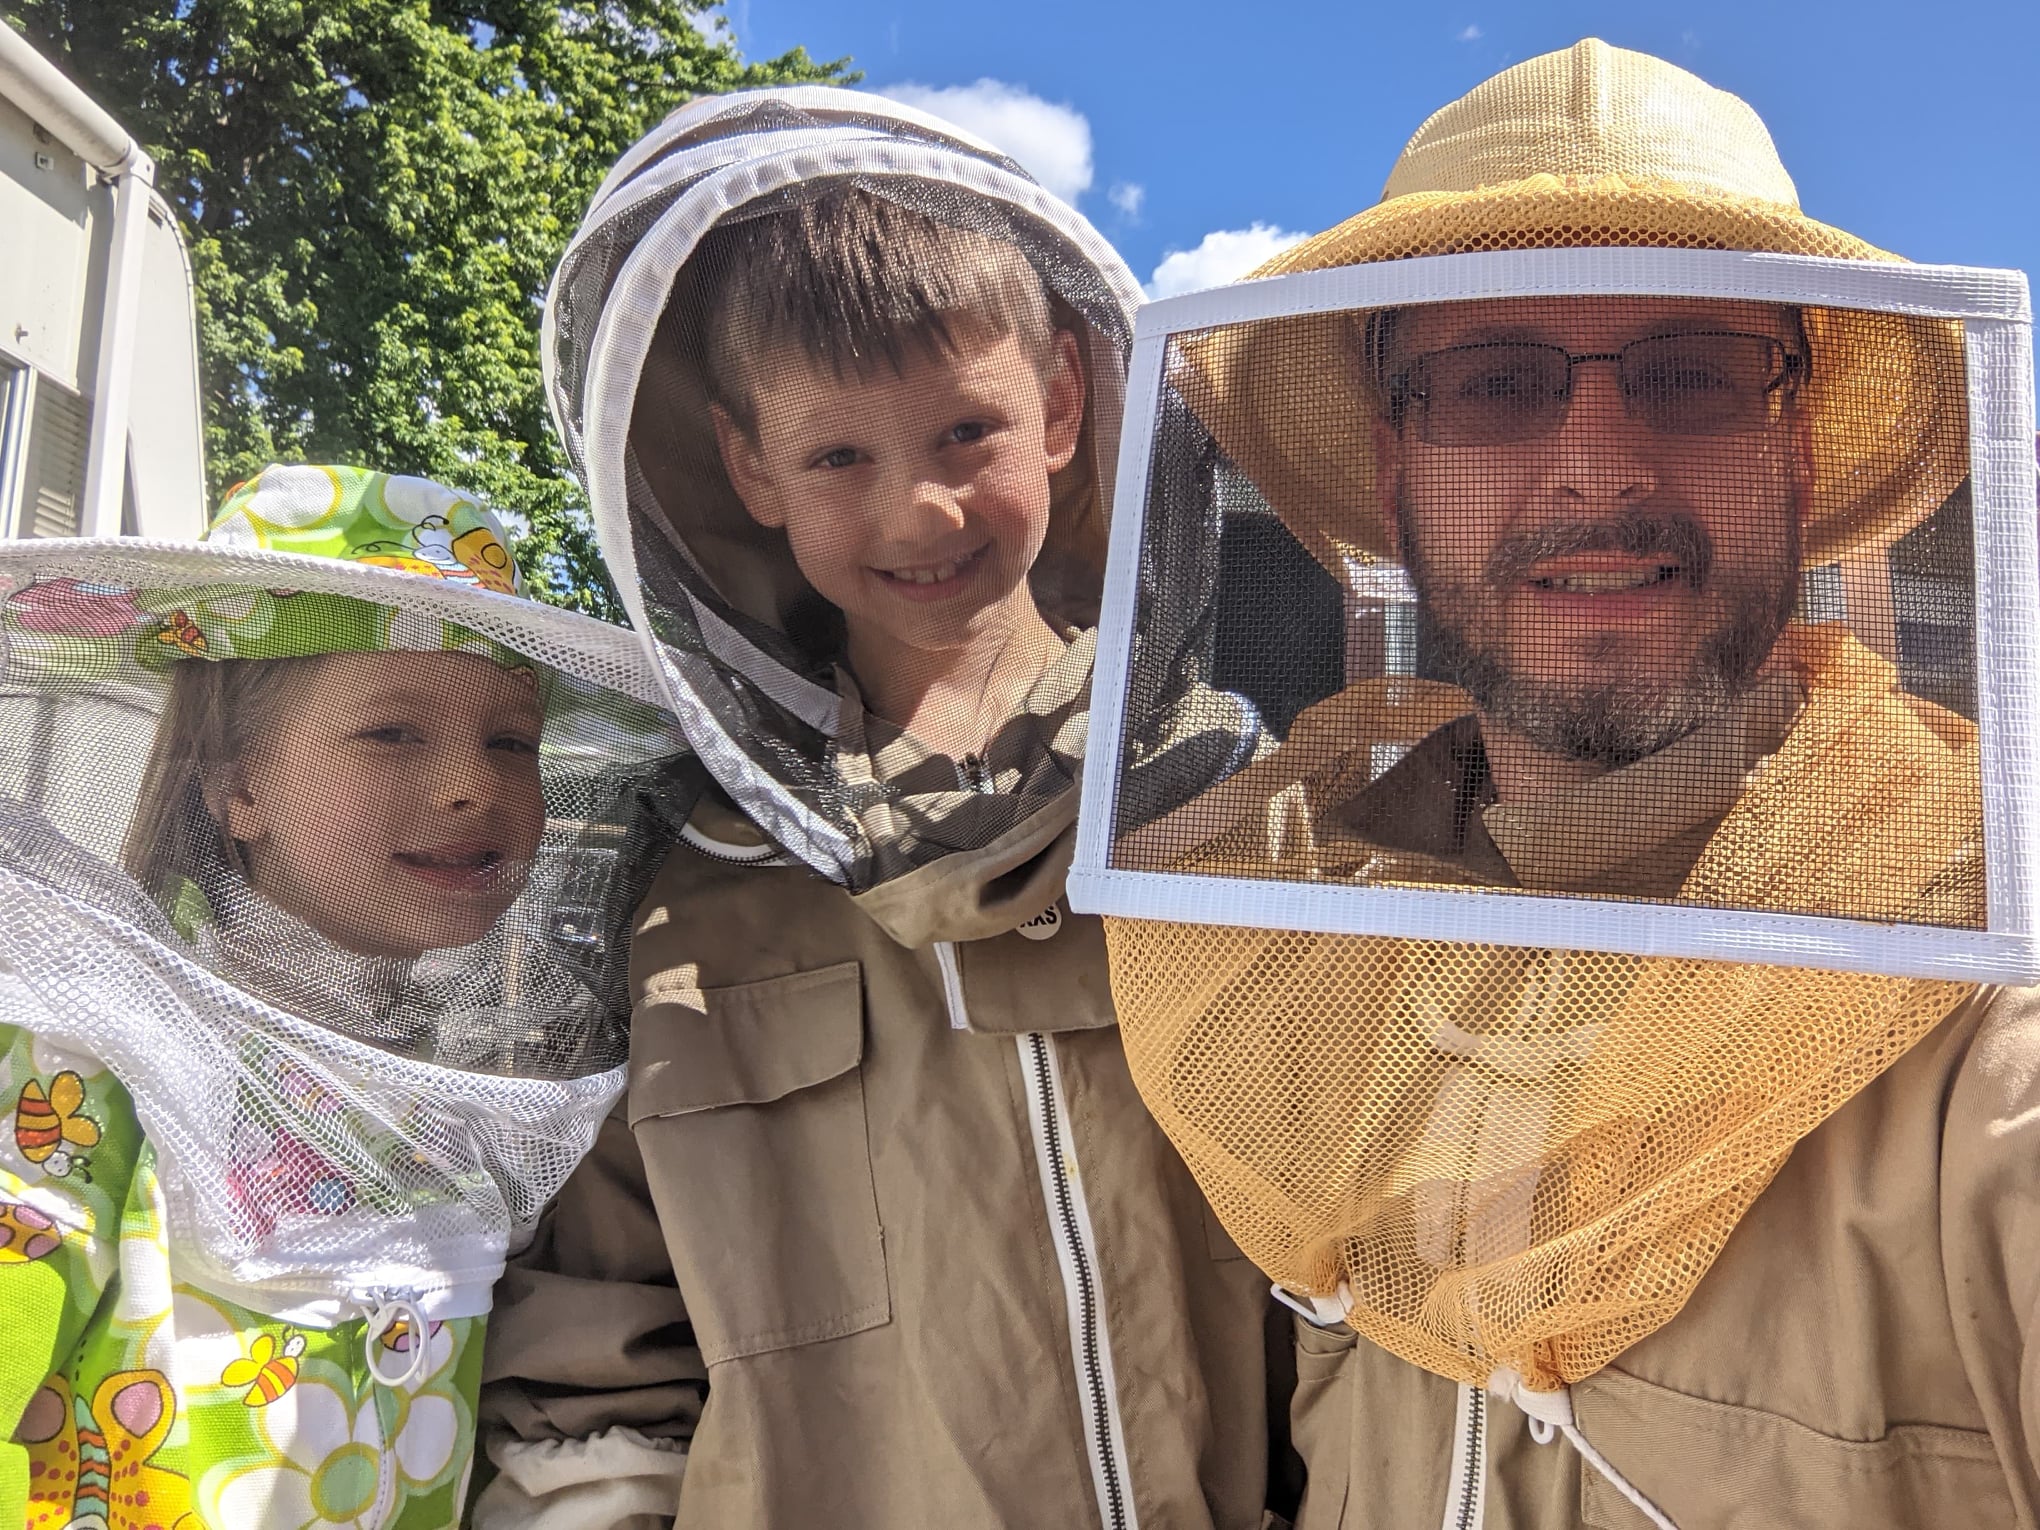 Treatment-Free Beekeepers